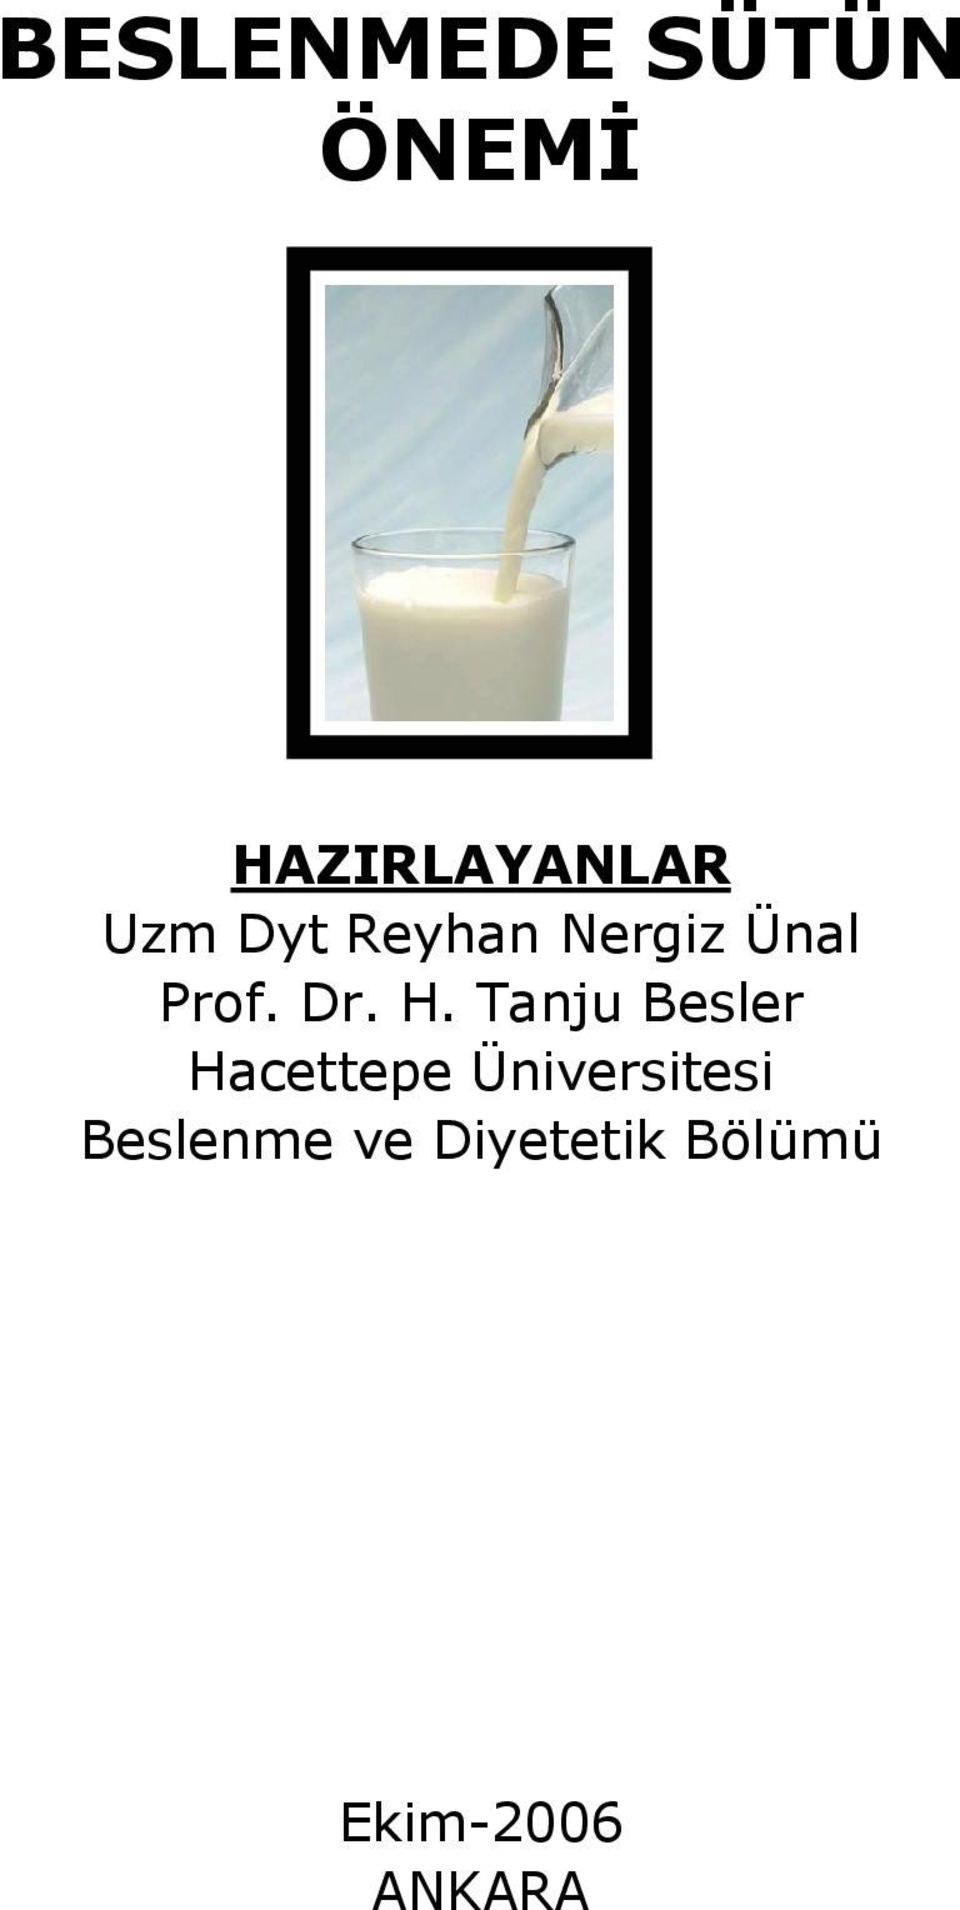 Tanju Besler Hacettepe Üniversitesi